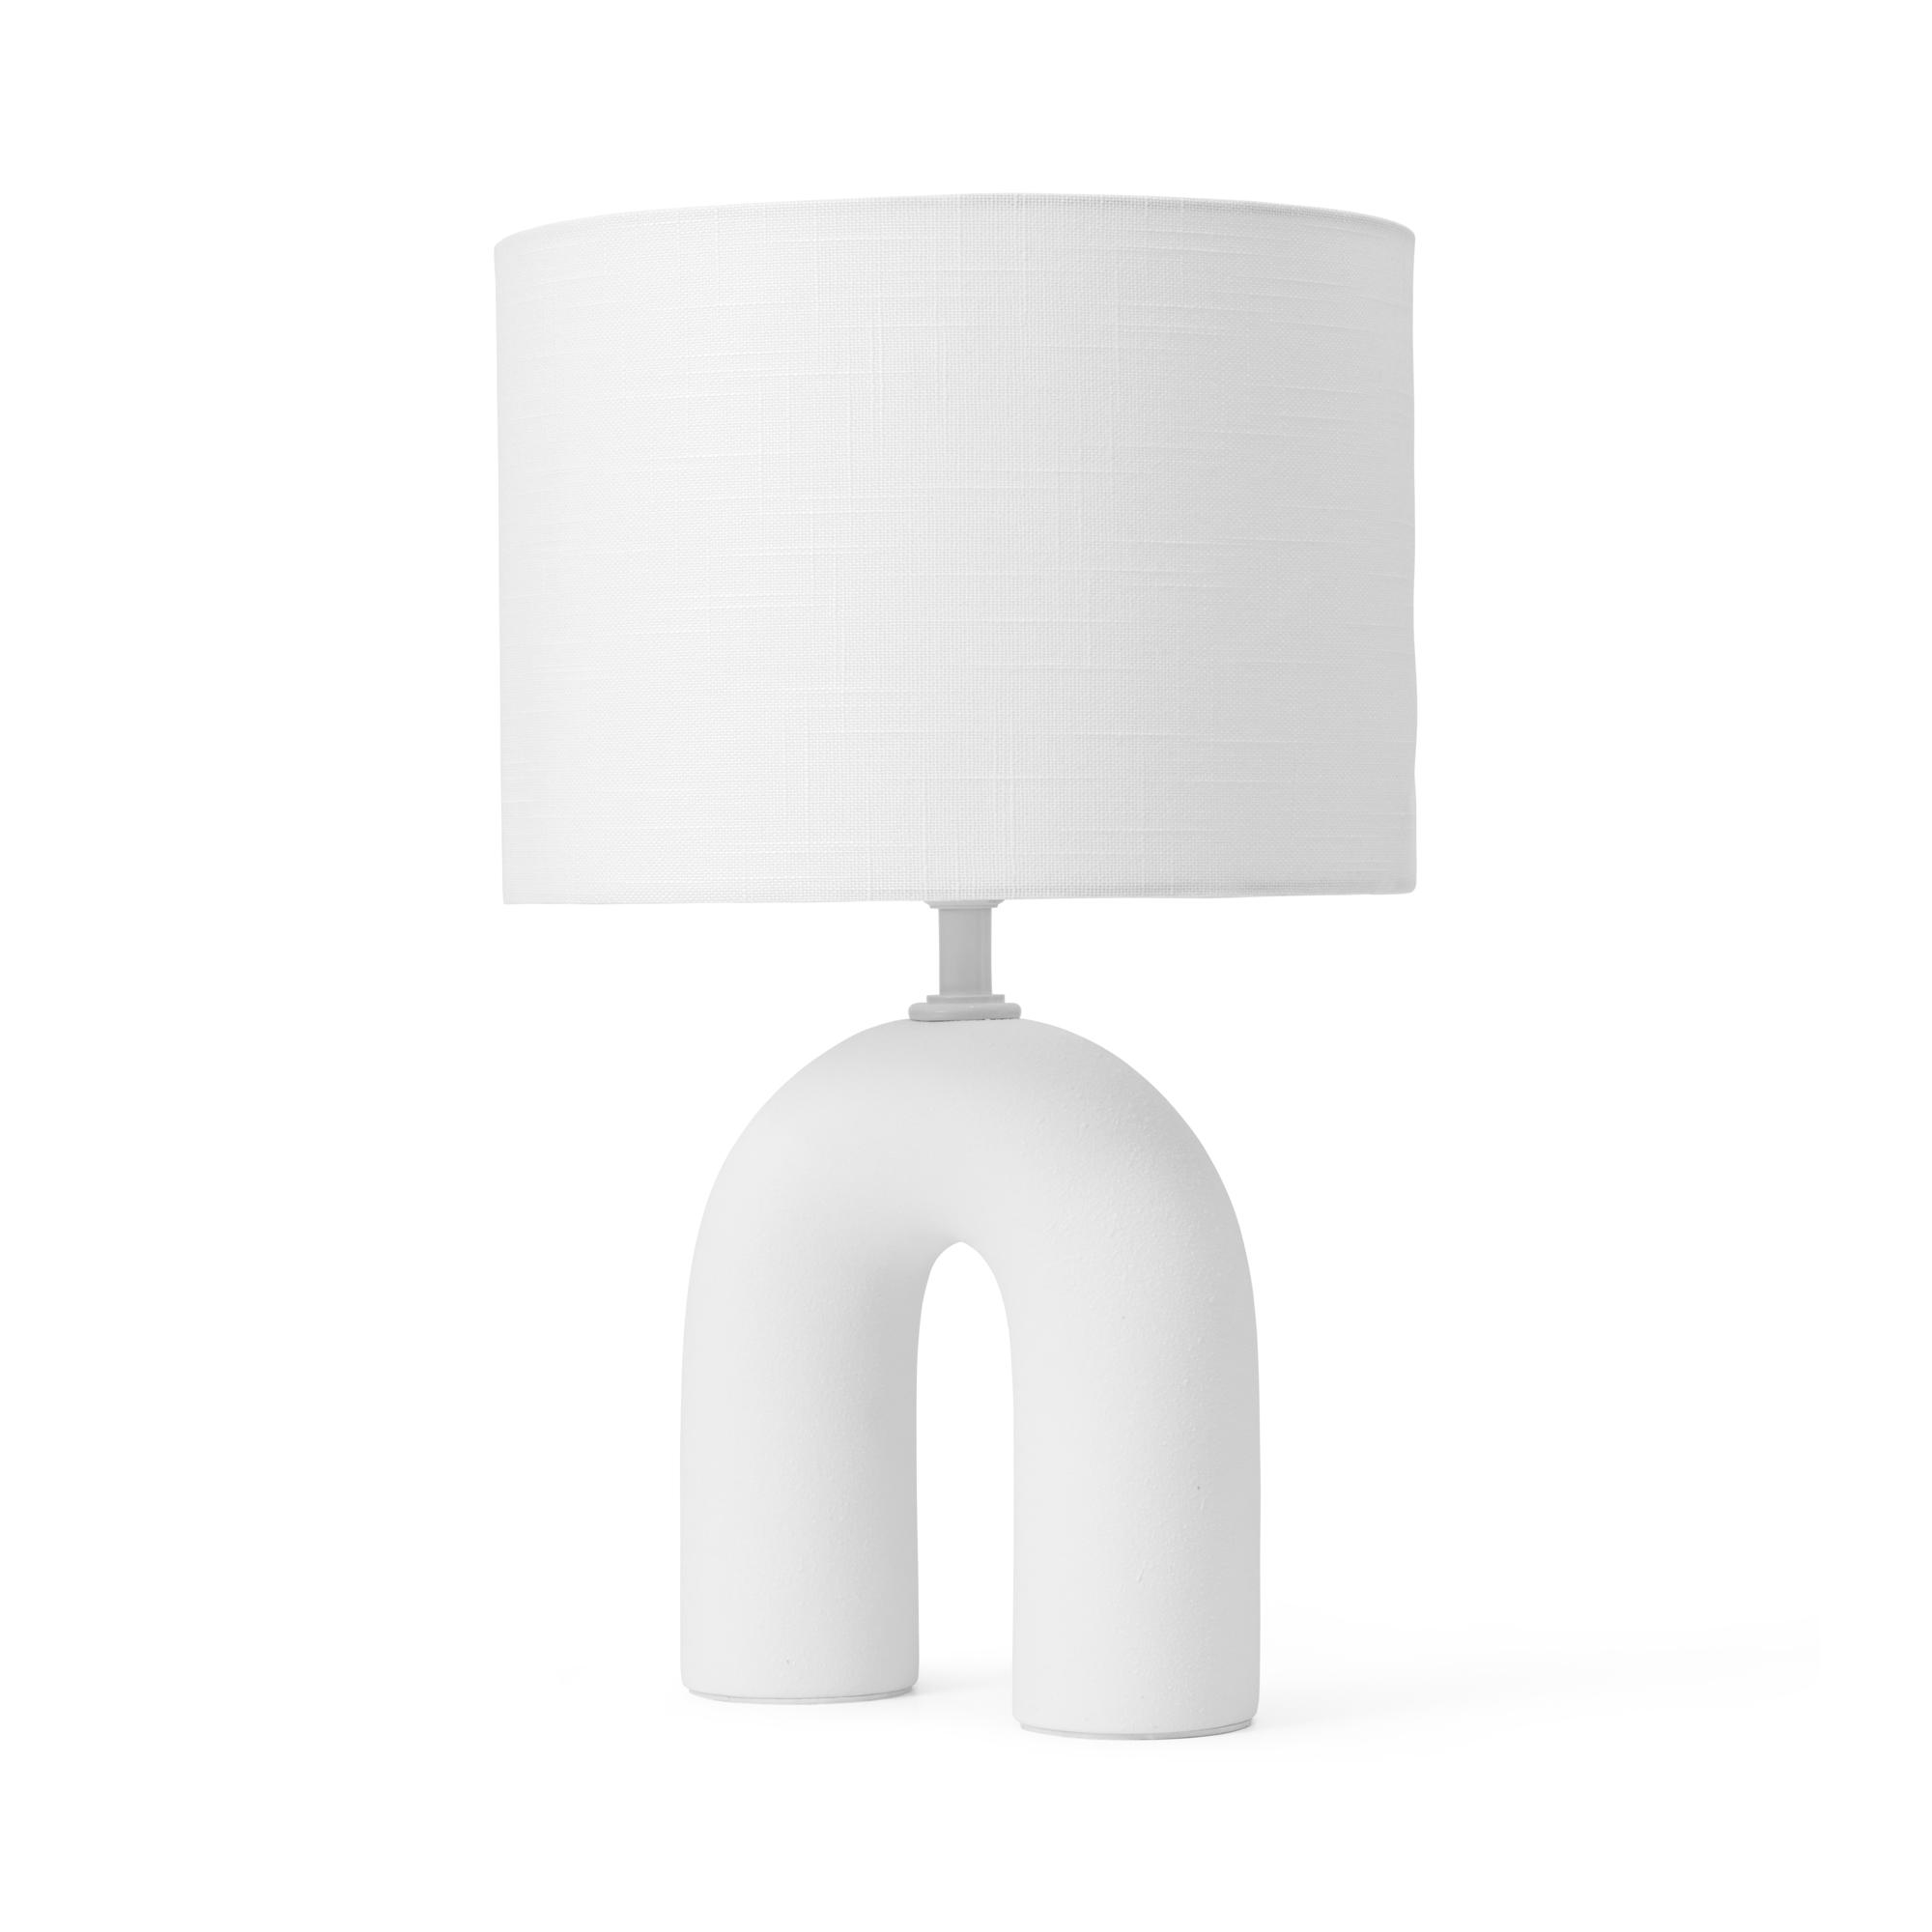 Stori Arch Table Lamp White